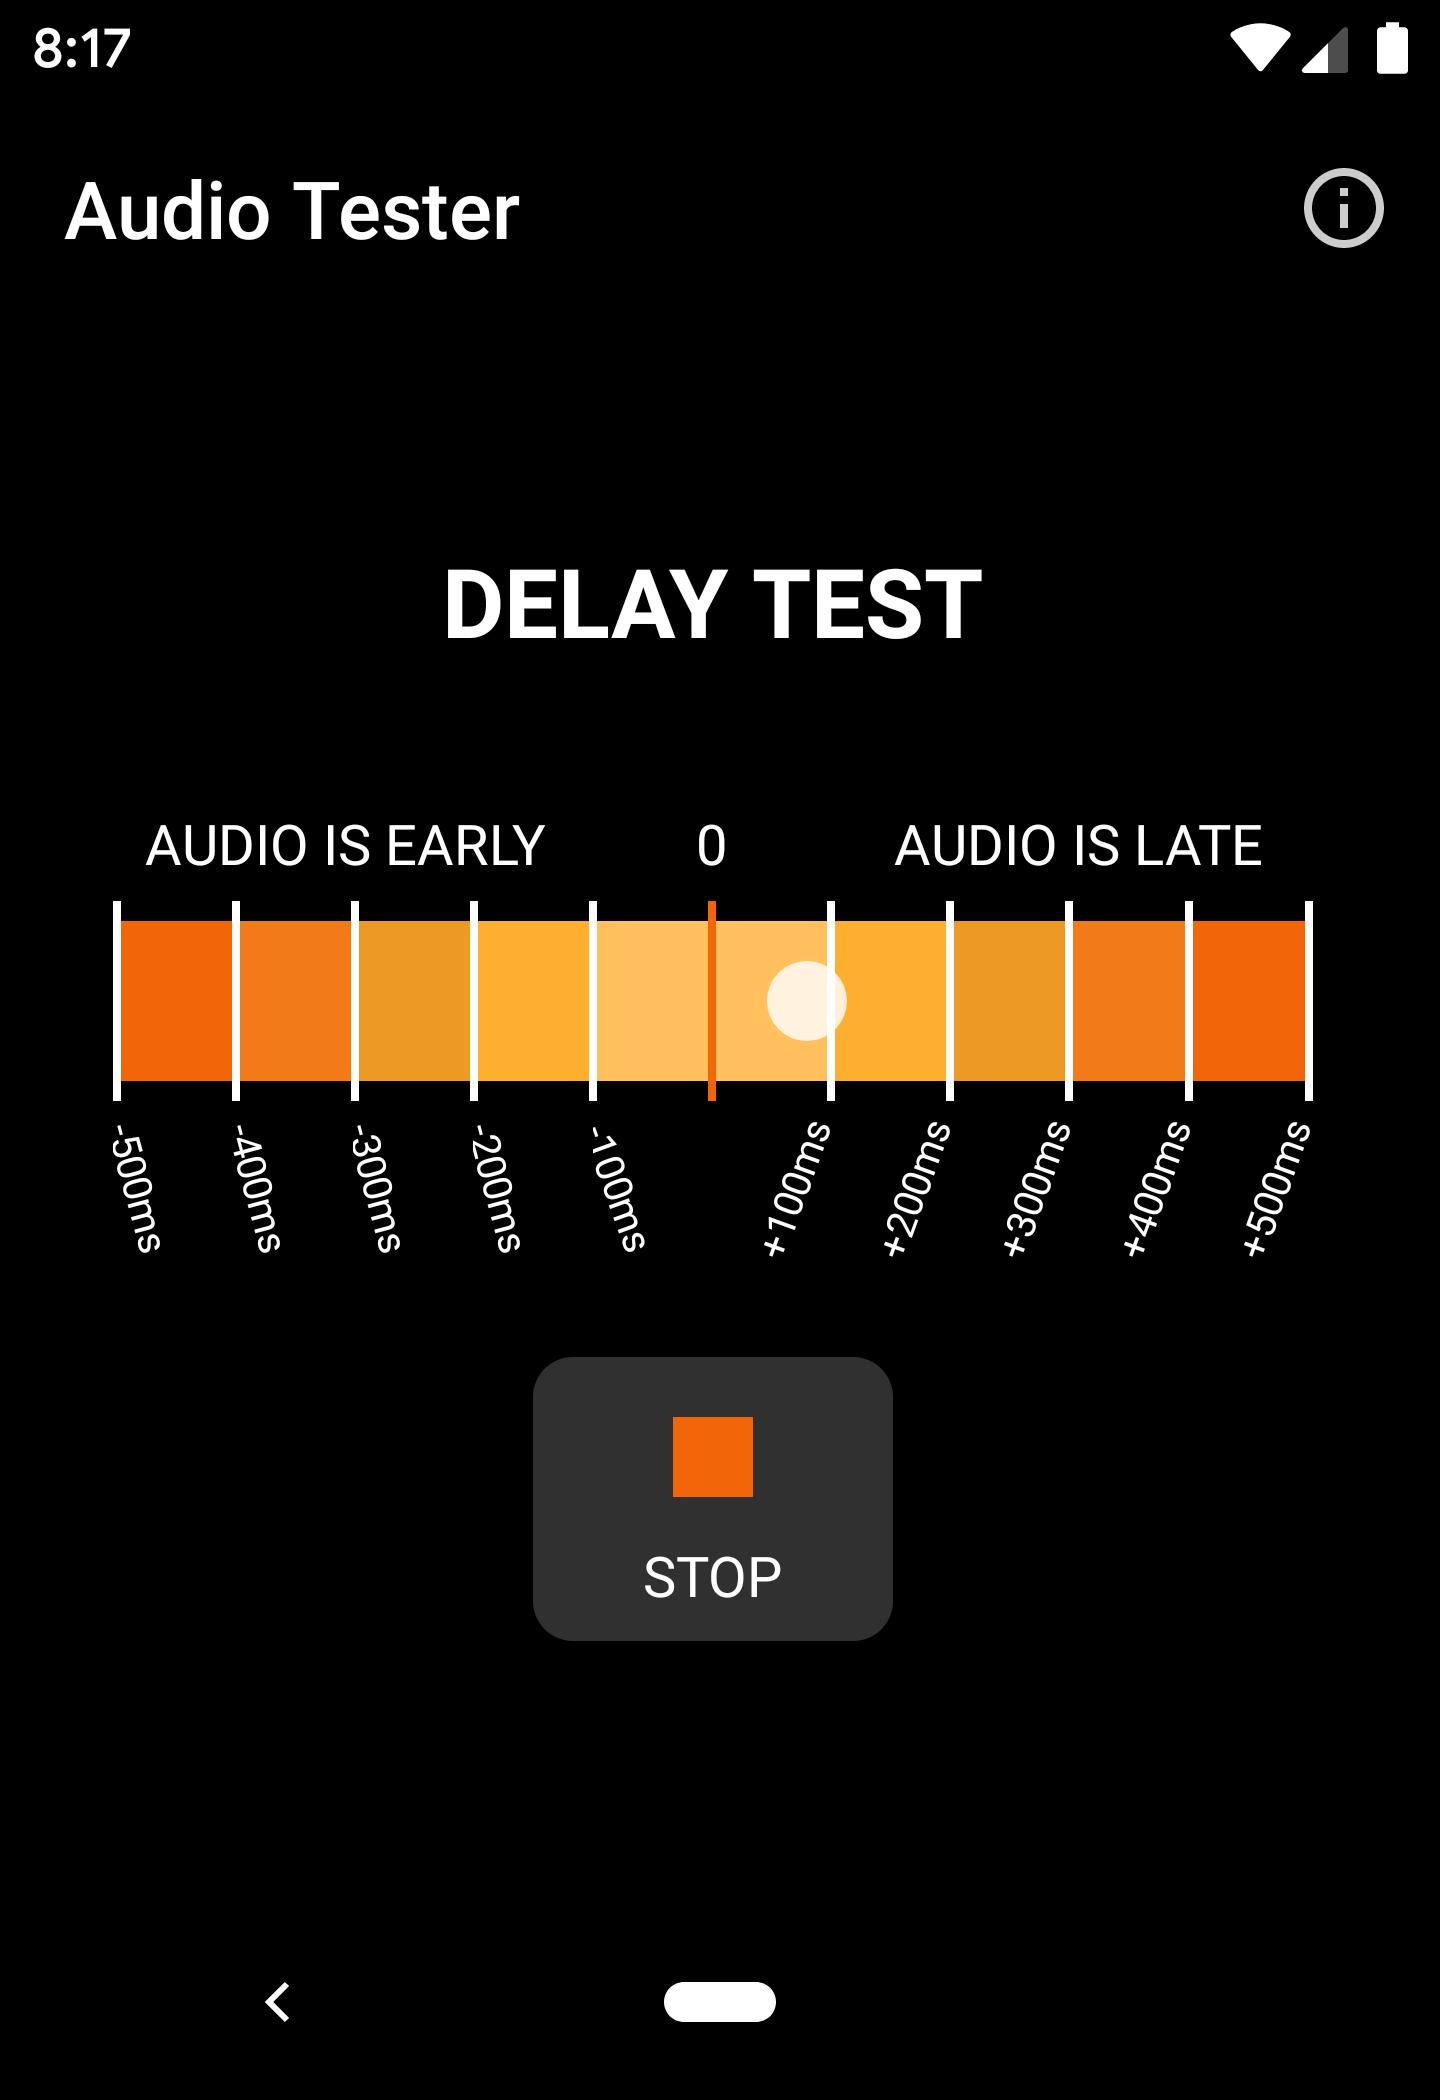 English audio tests. Audio Test. AUDIOTESTER калибровка. VALDIKSS Audio Test. Delay Audio array.